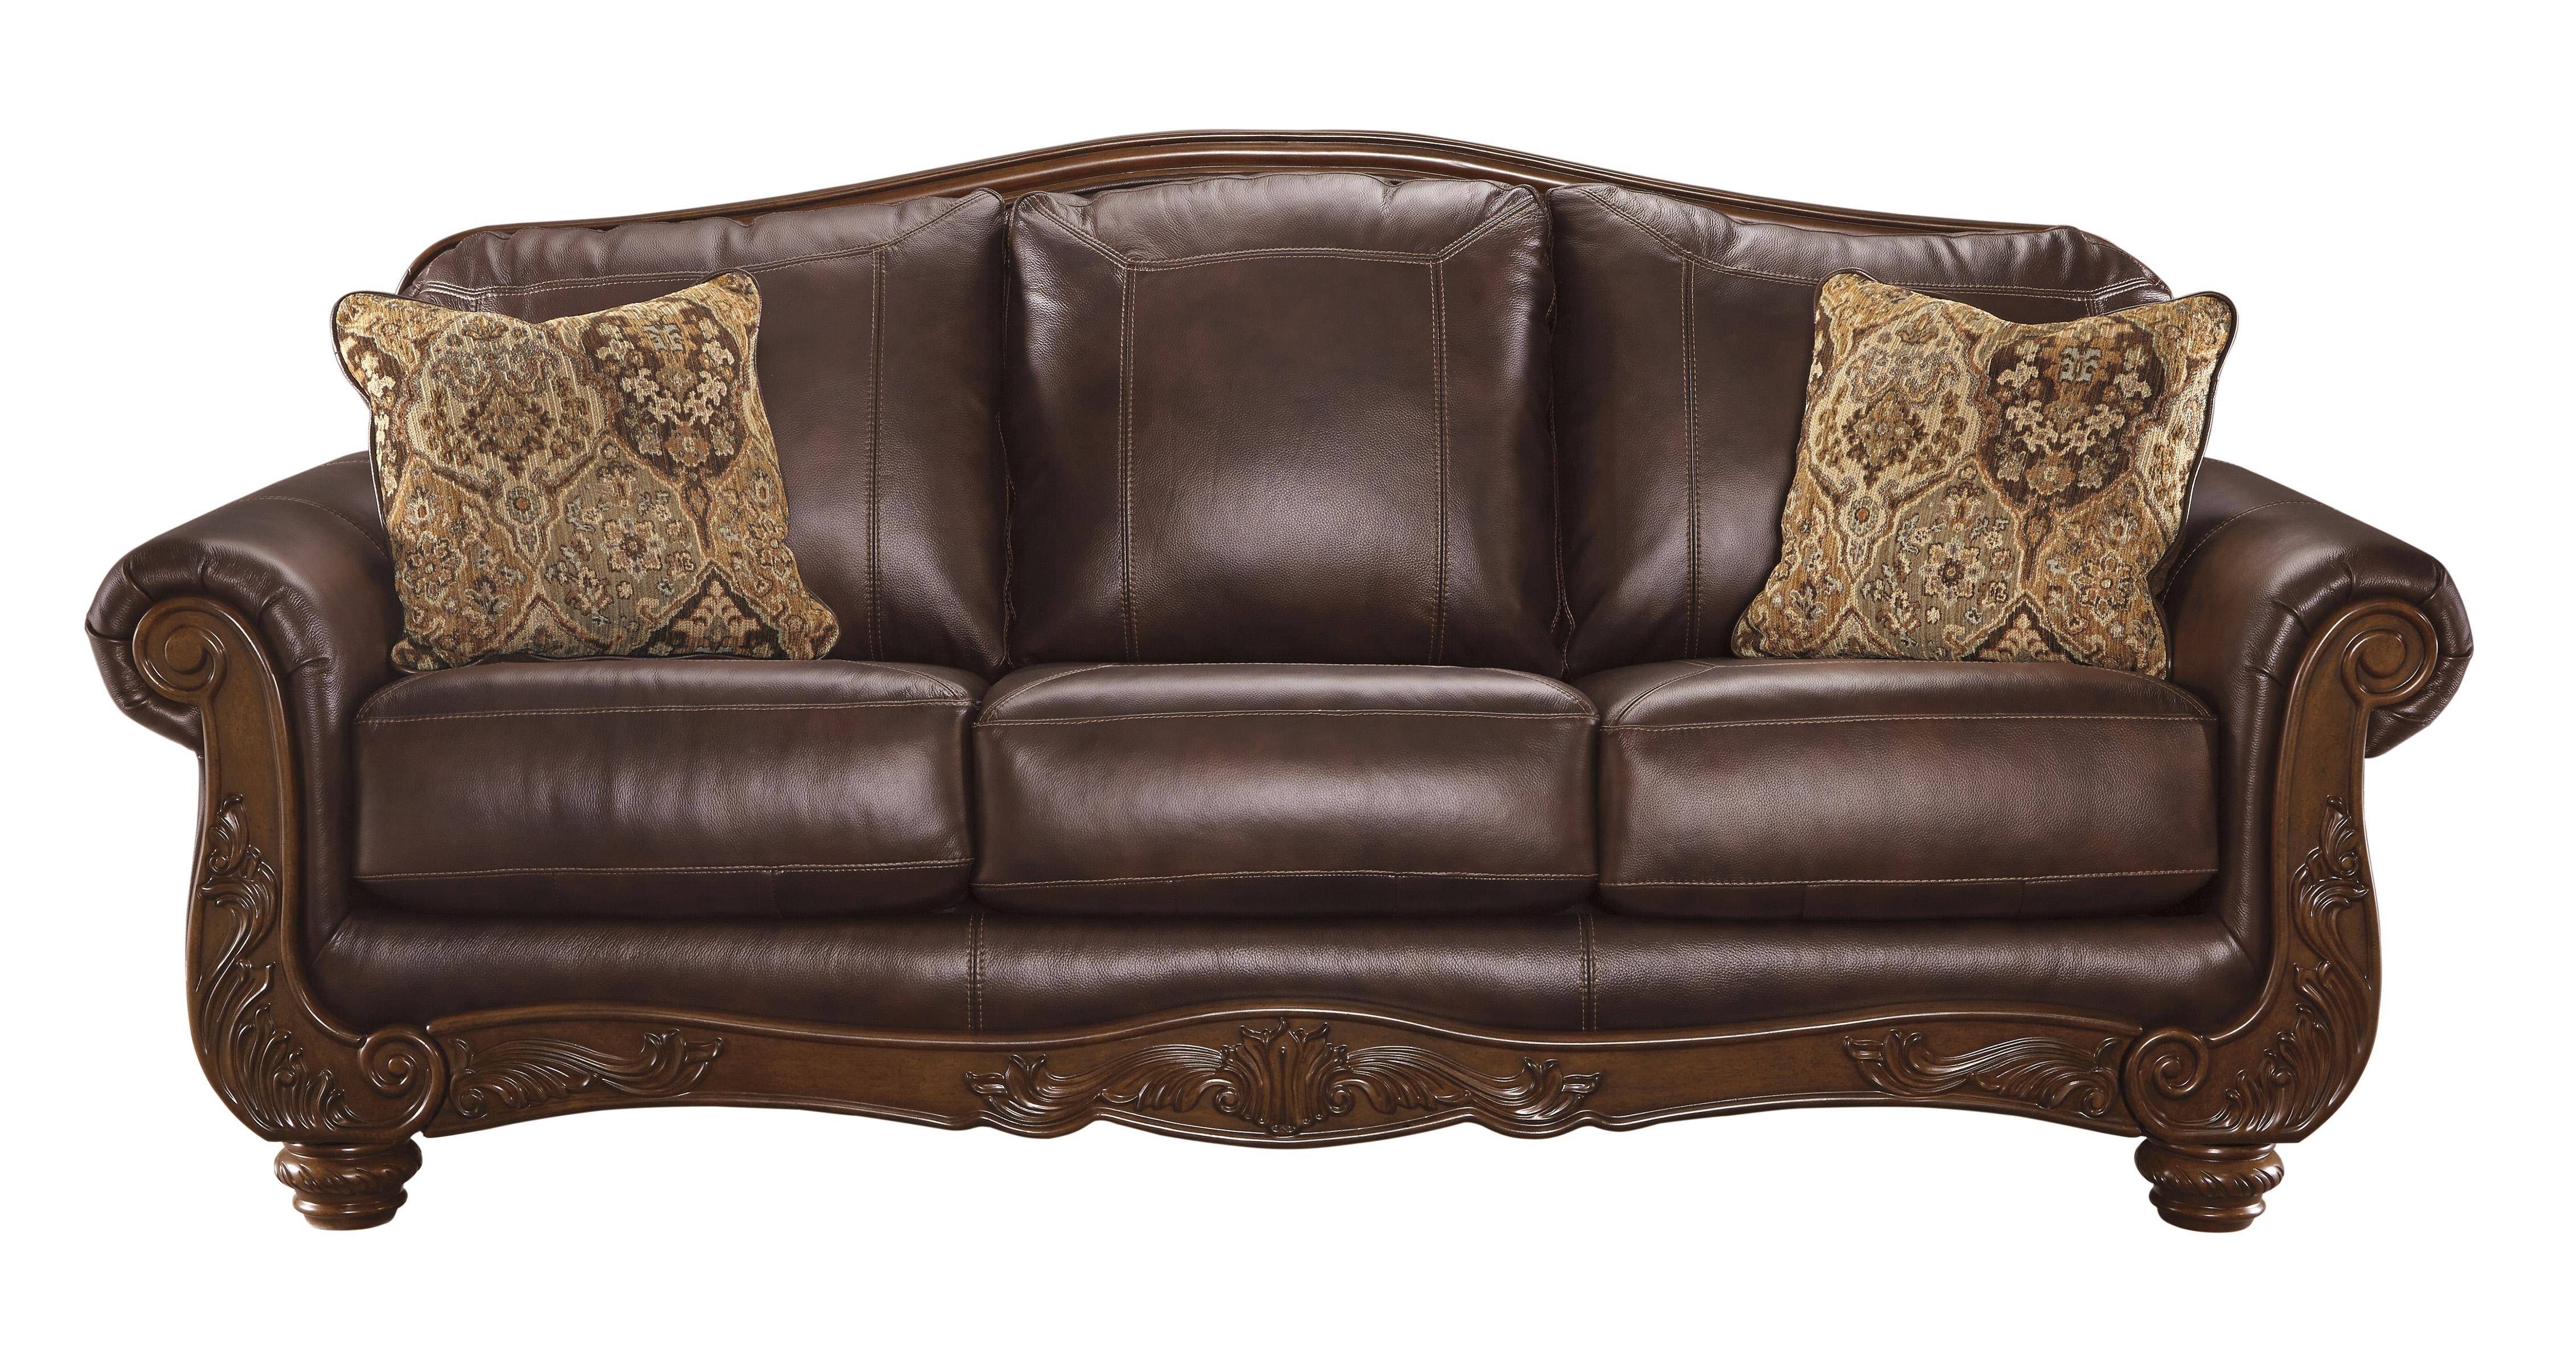 ashley leather sofa warrenty information